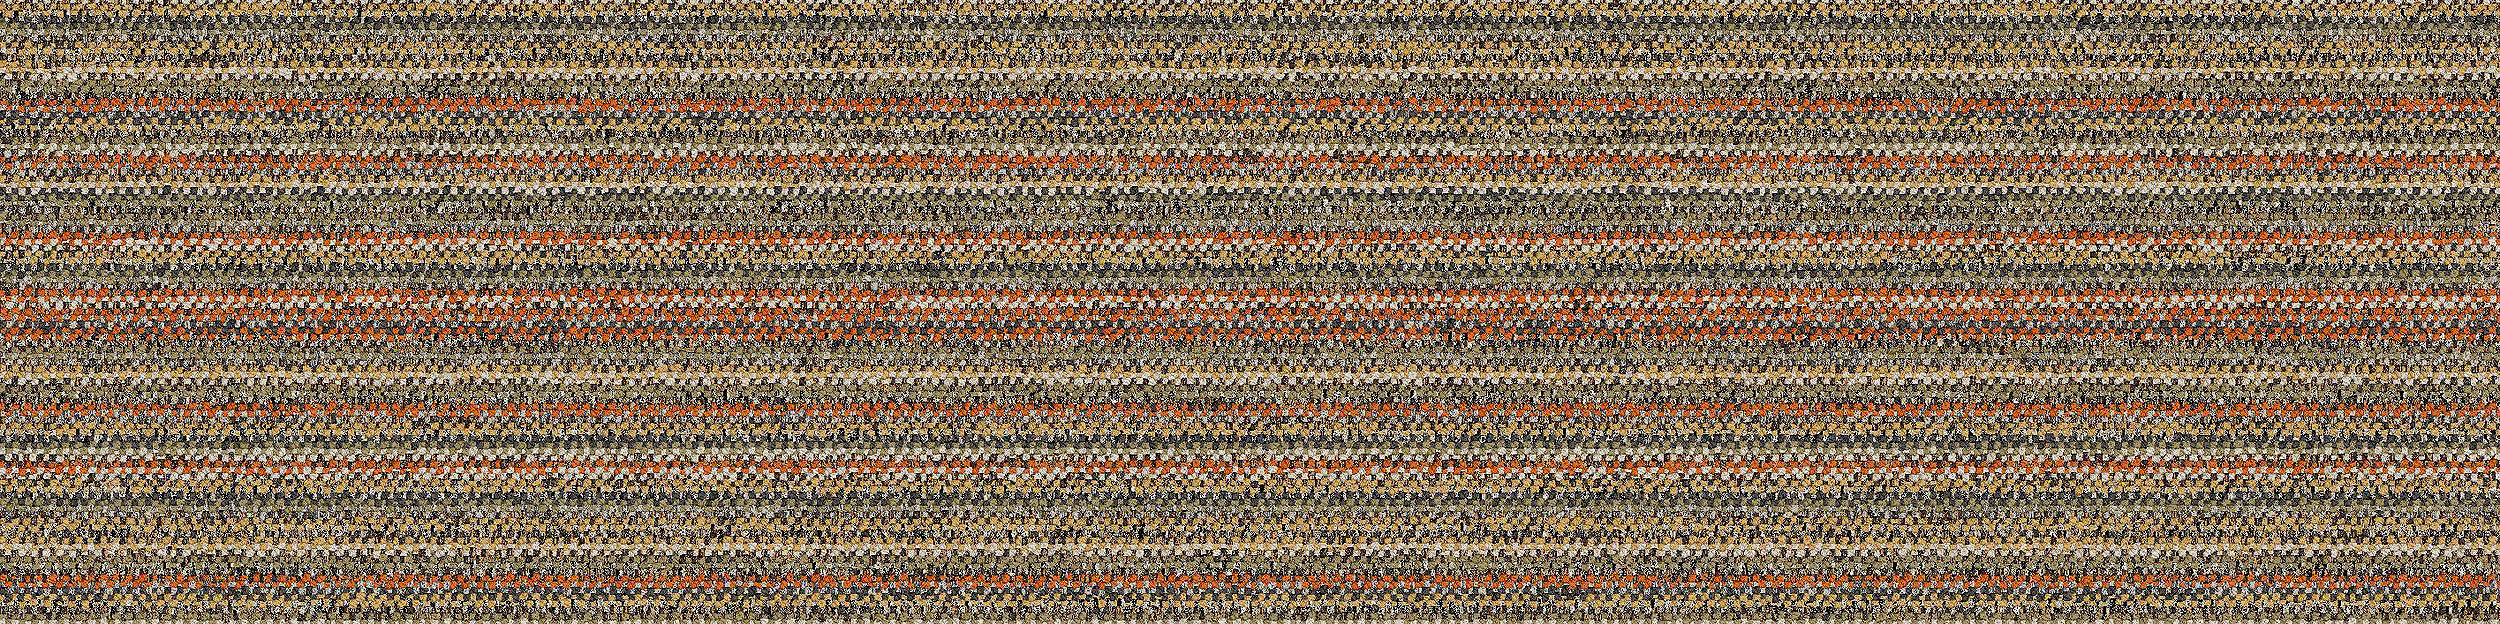 WW865 Carpet Tile In Autumn Warp image number 9